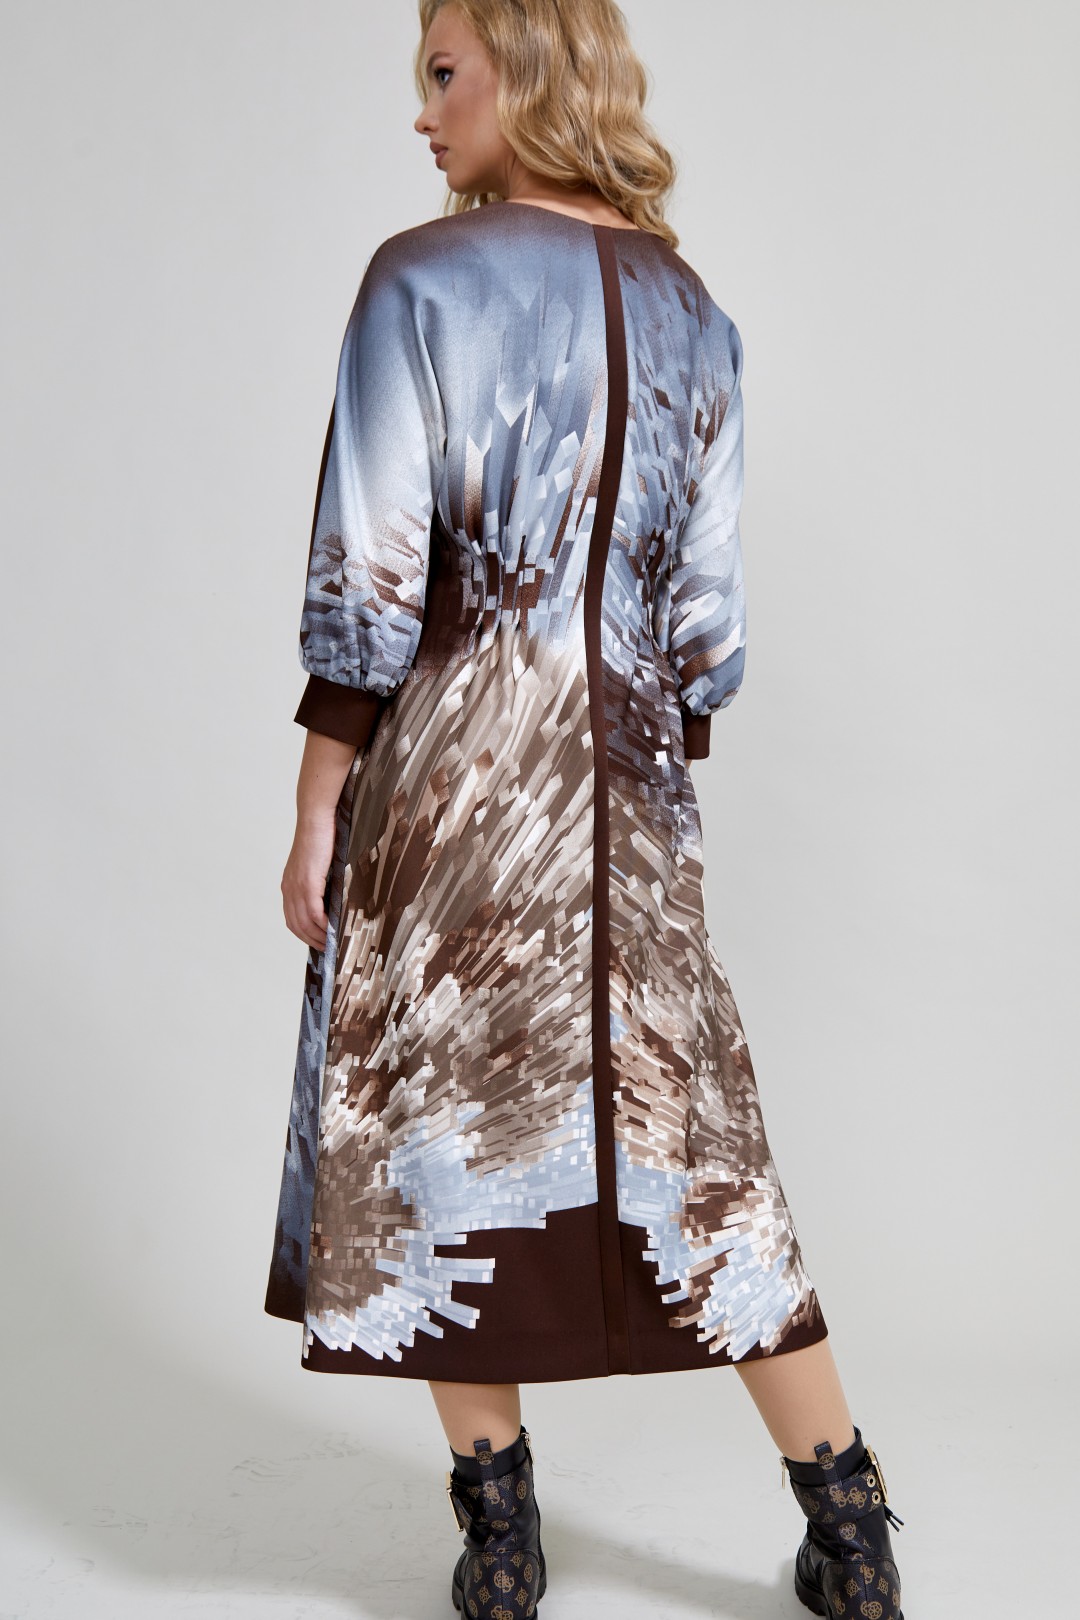 Платье ТЭФФИ-стиль 1592 молочный шоколад + кристаллы